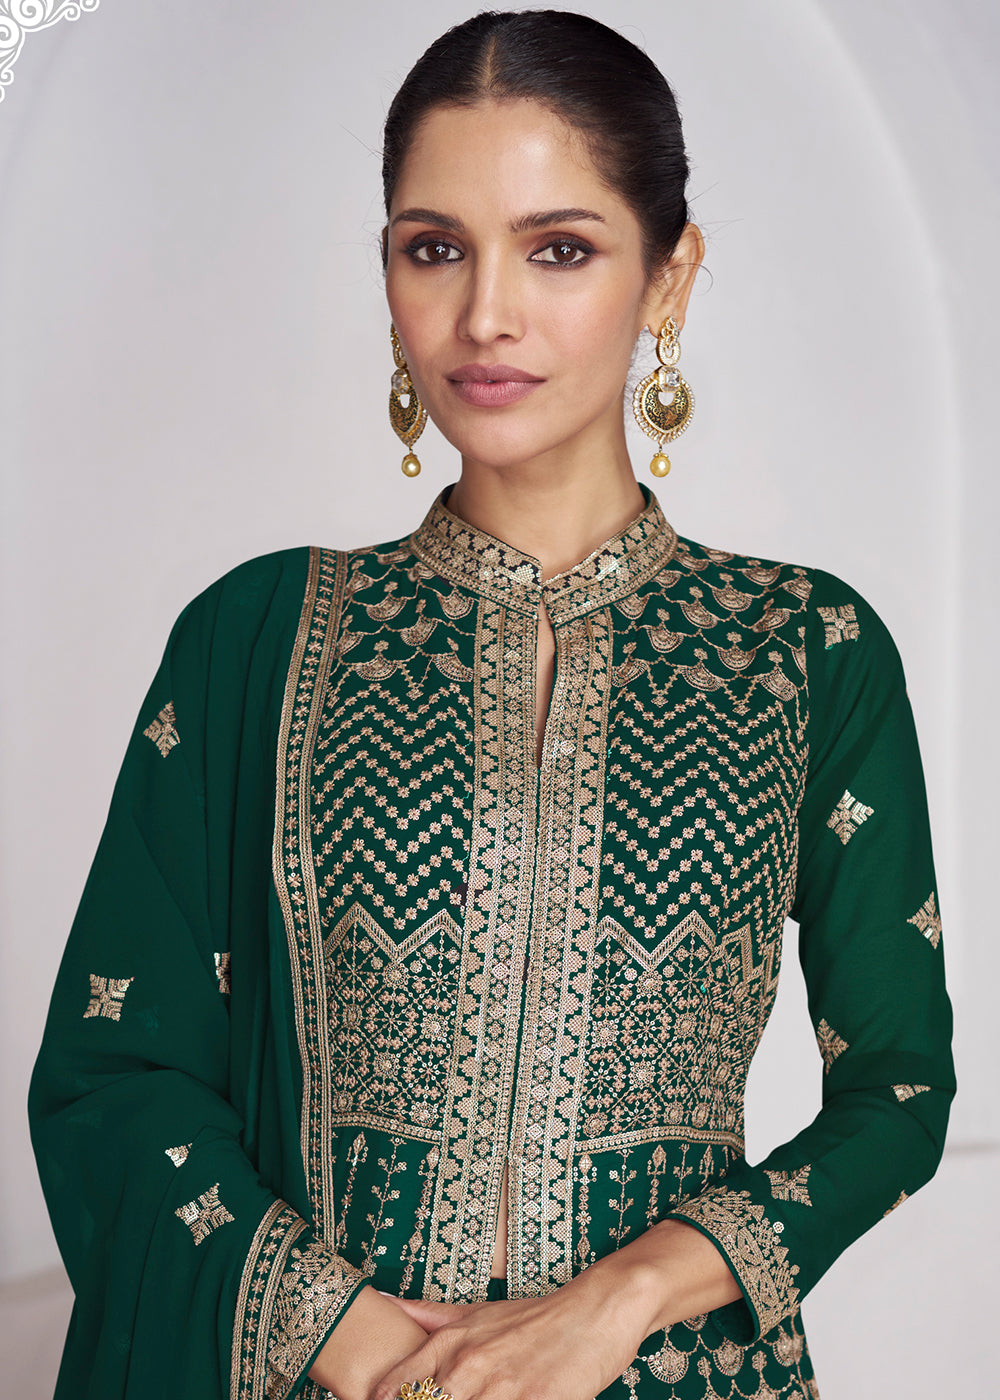 Buy Now Wedding Wear Forest Green Lehenga Skirt Anarkali Suit Online in USA, UK, Australia, New Zealand, Canada & Worldwide at Empress Clothing. 